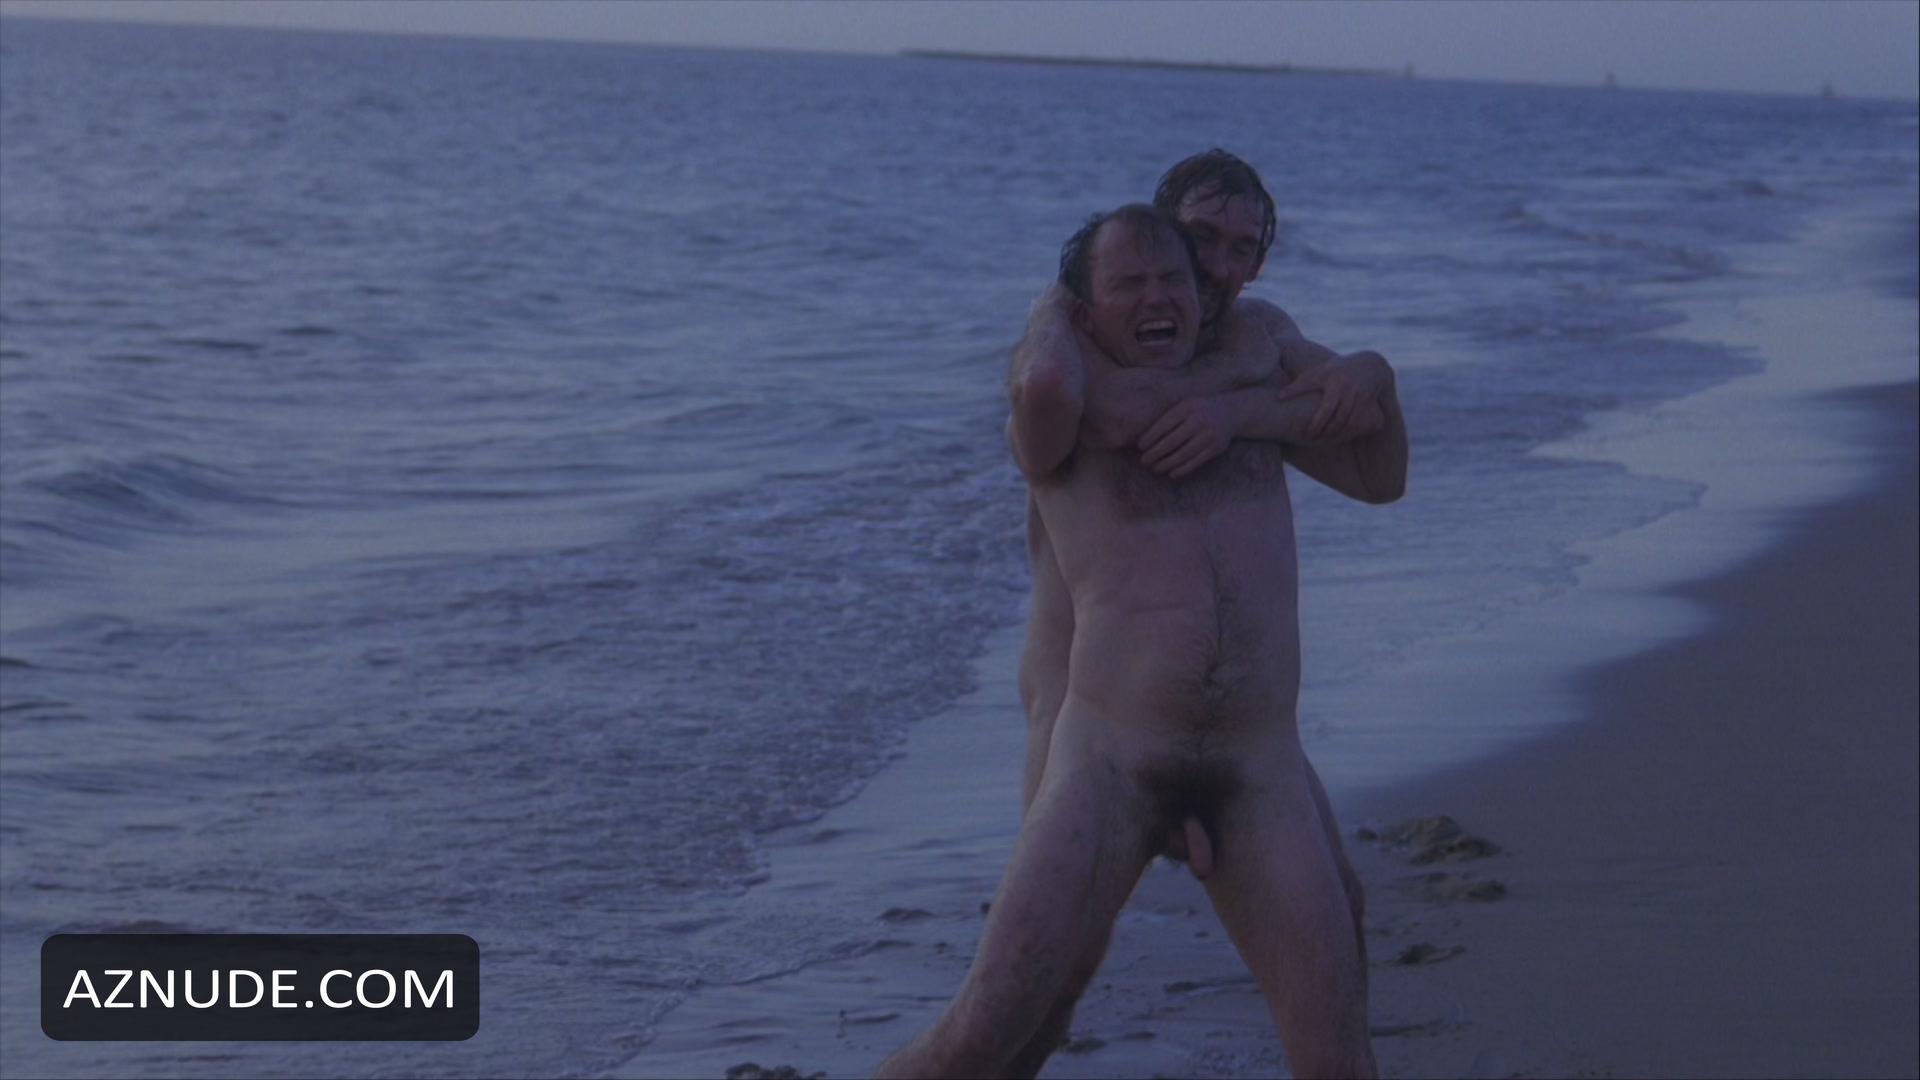 Kinnear Nude Images - RORY KINNEAR Nude - AZNude Men